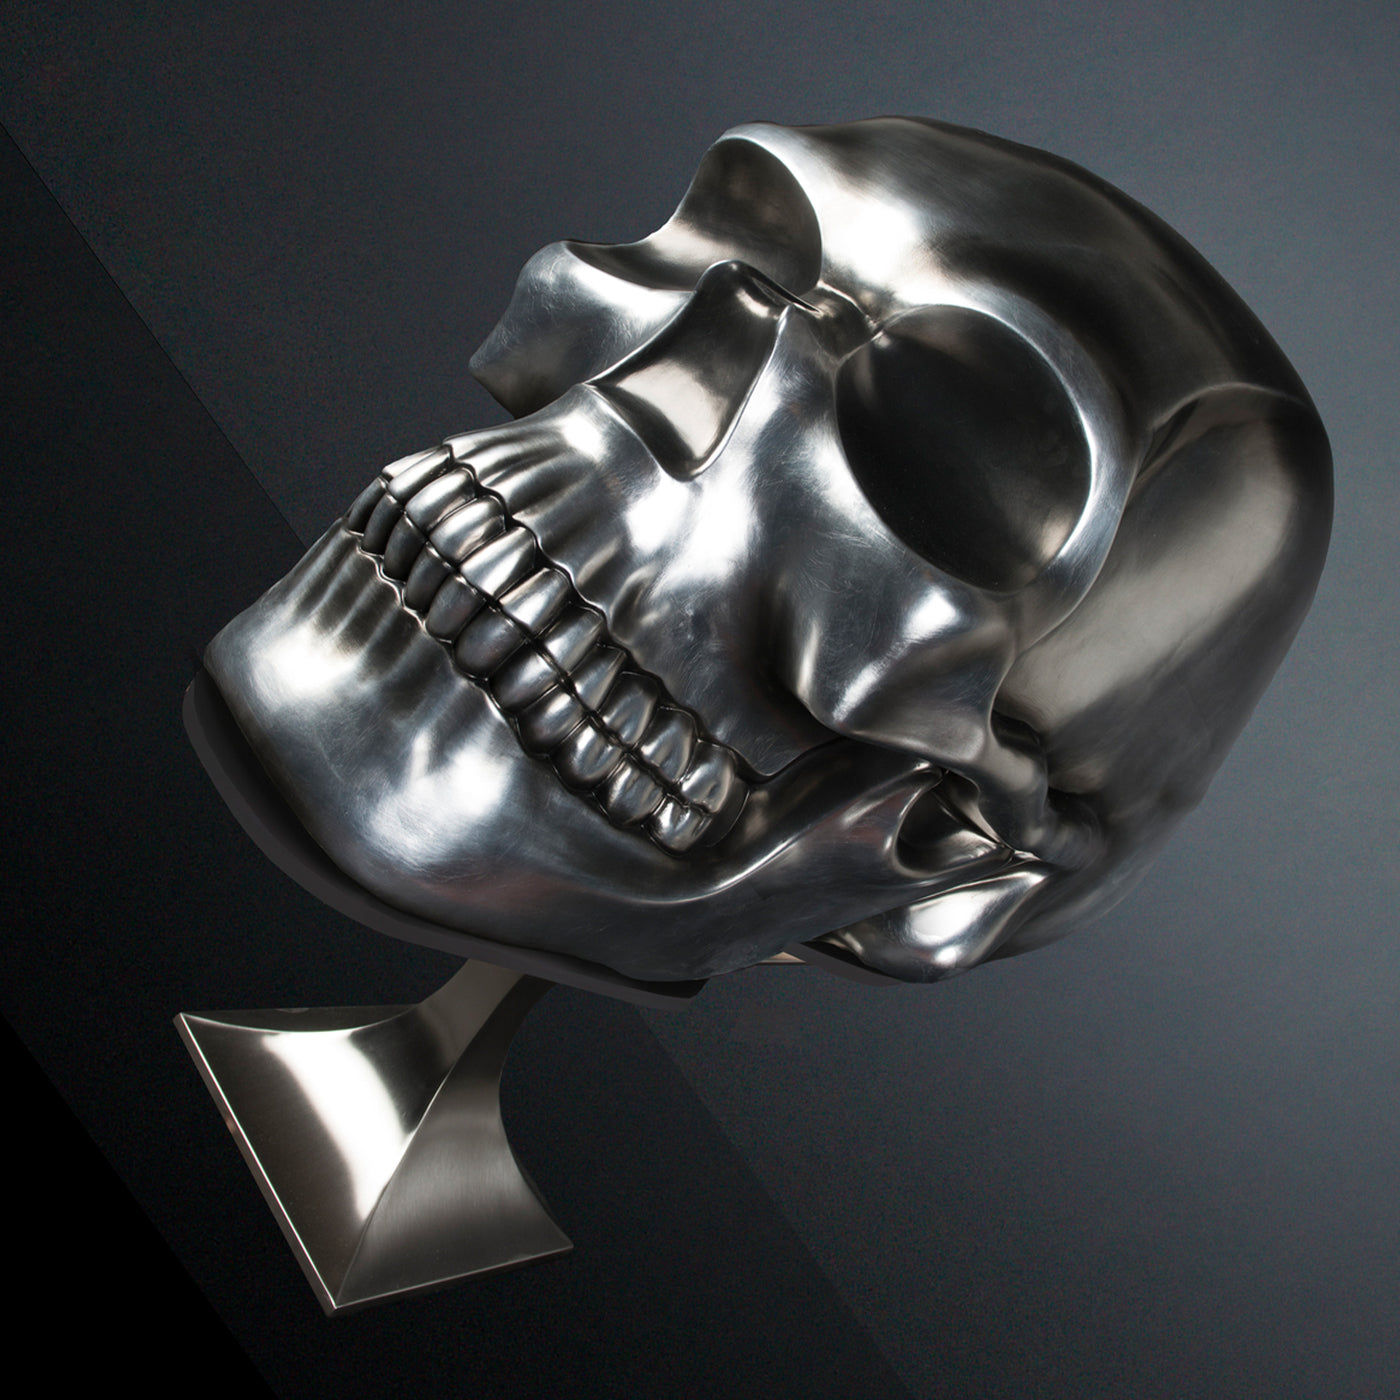 Black and Silver Skull Sculpture - Alternative view 3